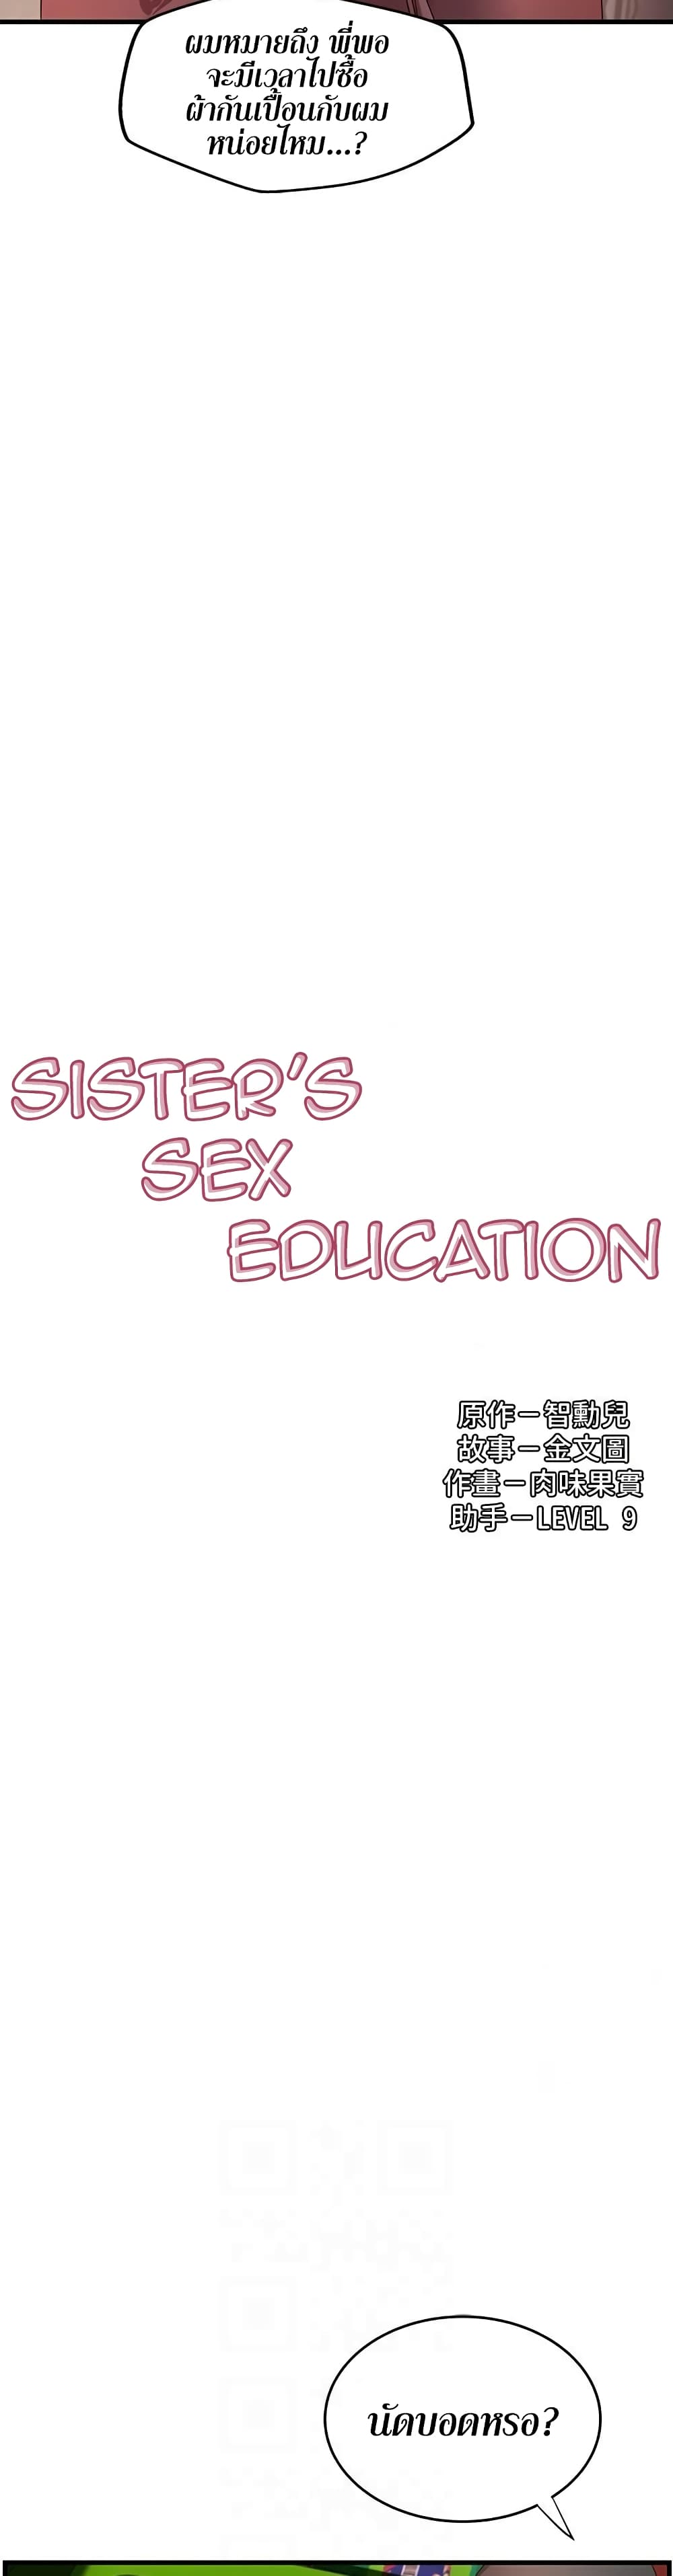 Sister's Sex Education 14-14